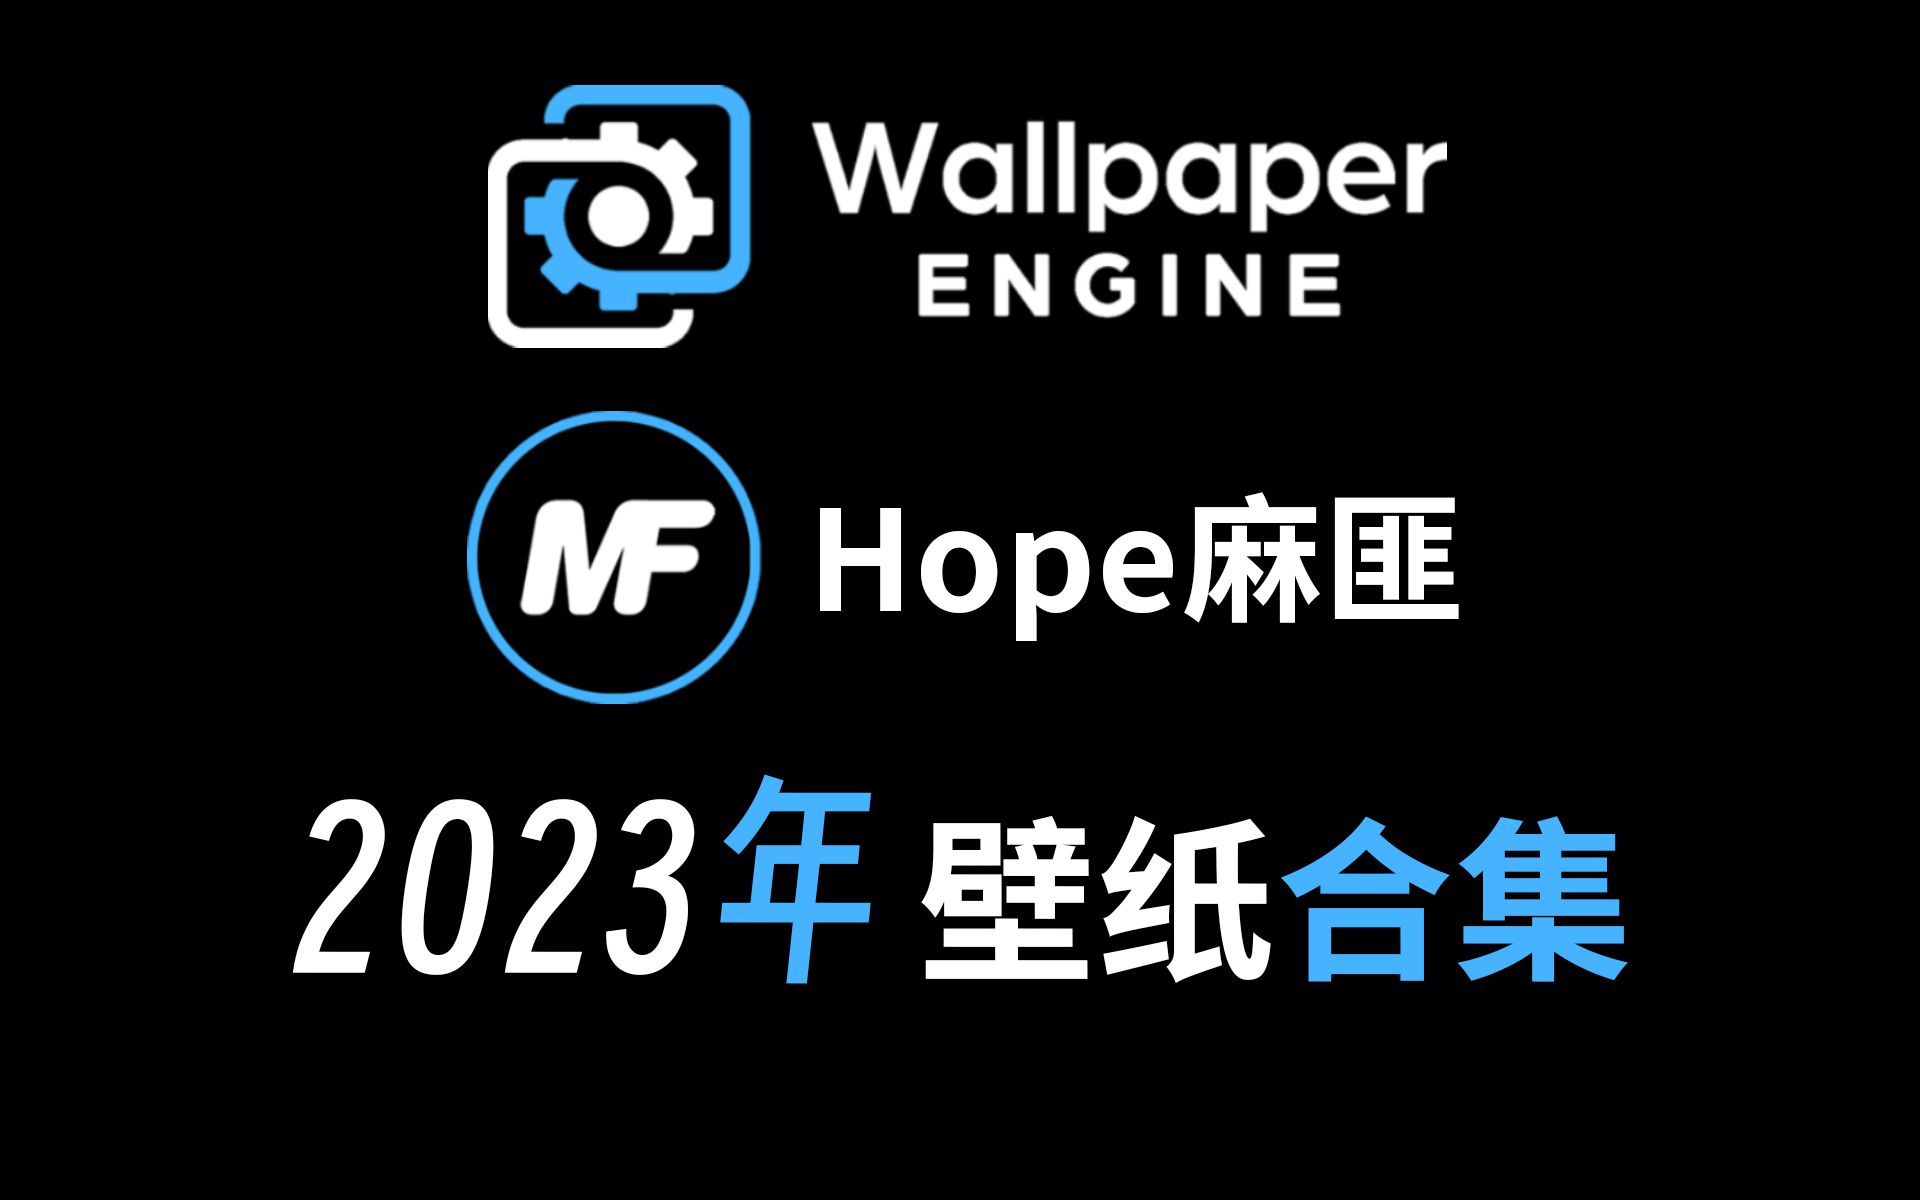 【麻匪】2023年 壁纸合集 Wallpaper Engine专属自定义动态壁纸